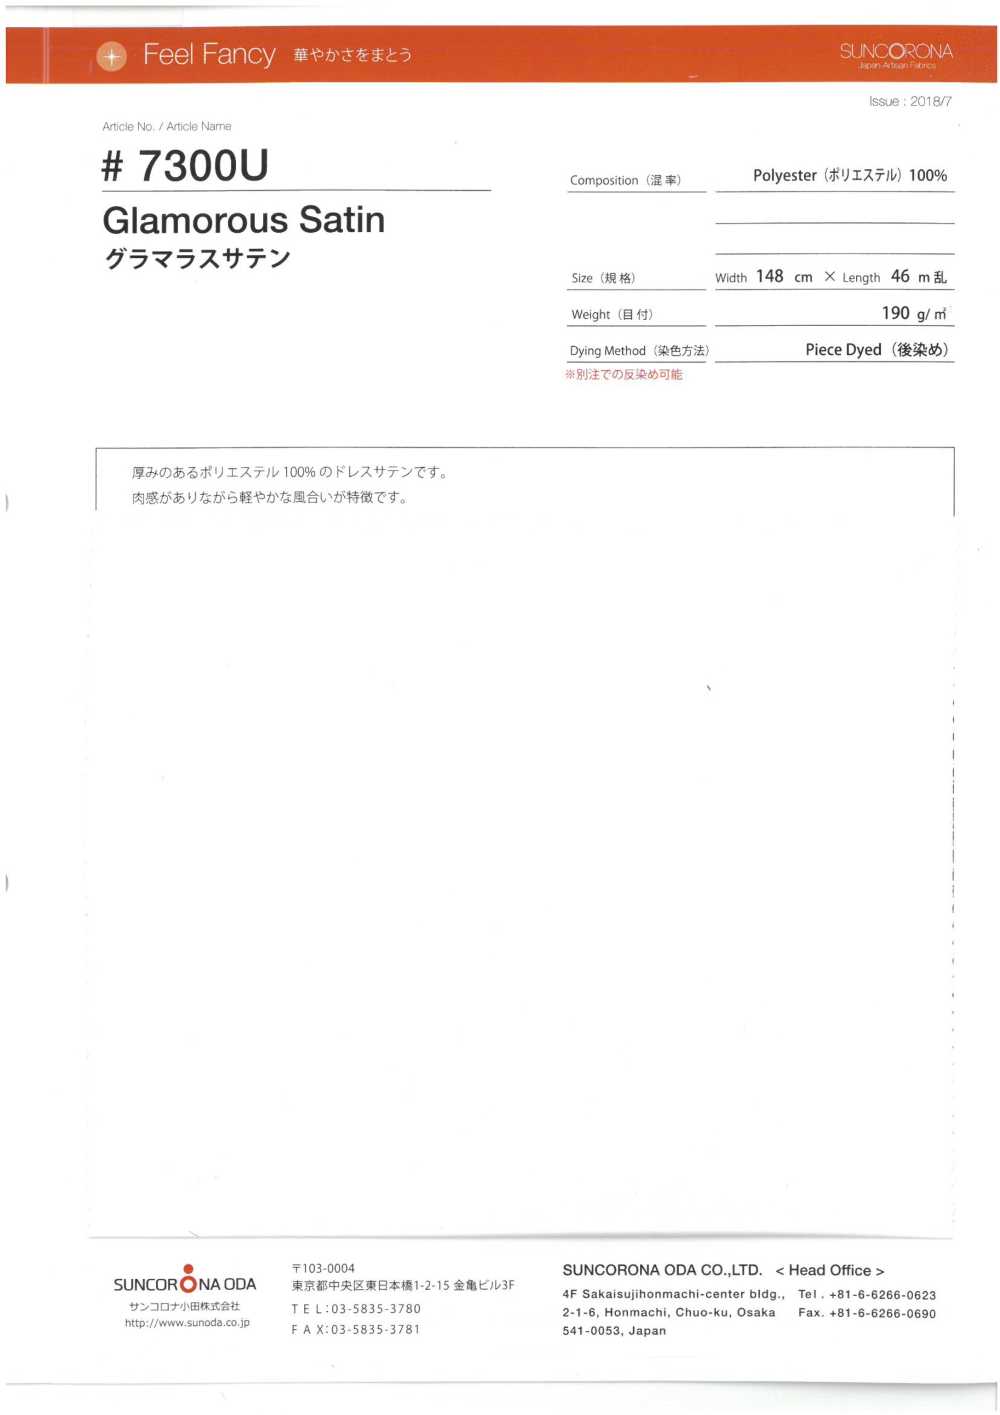 7300U Glamorous Satin[Textile / Fabric] Suncorona Oda